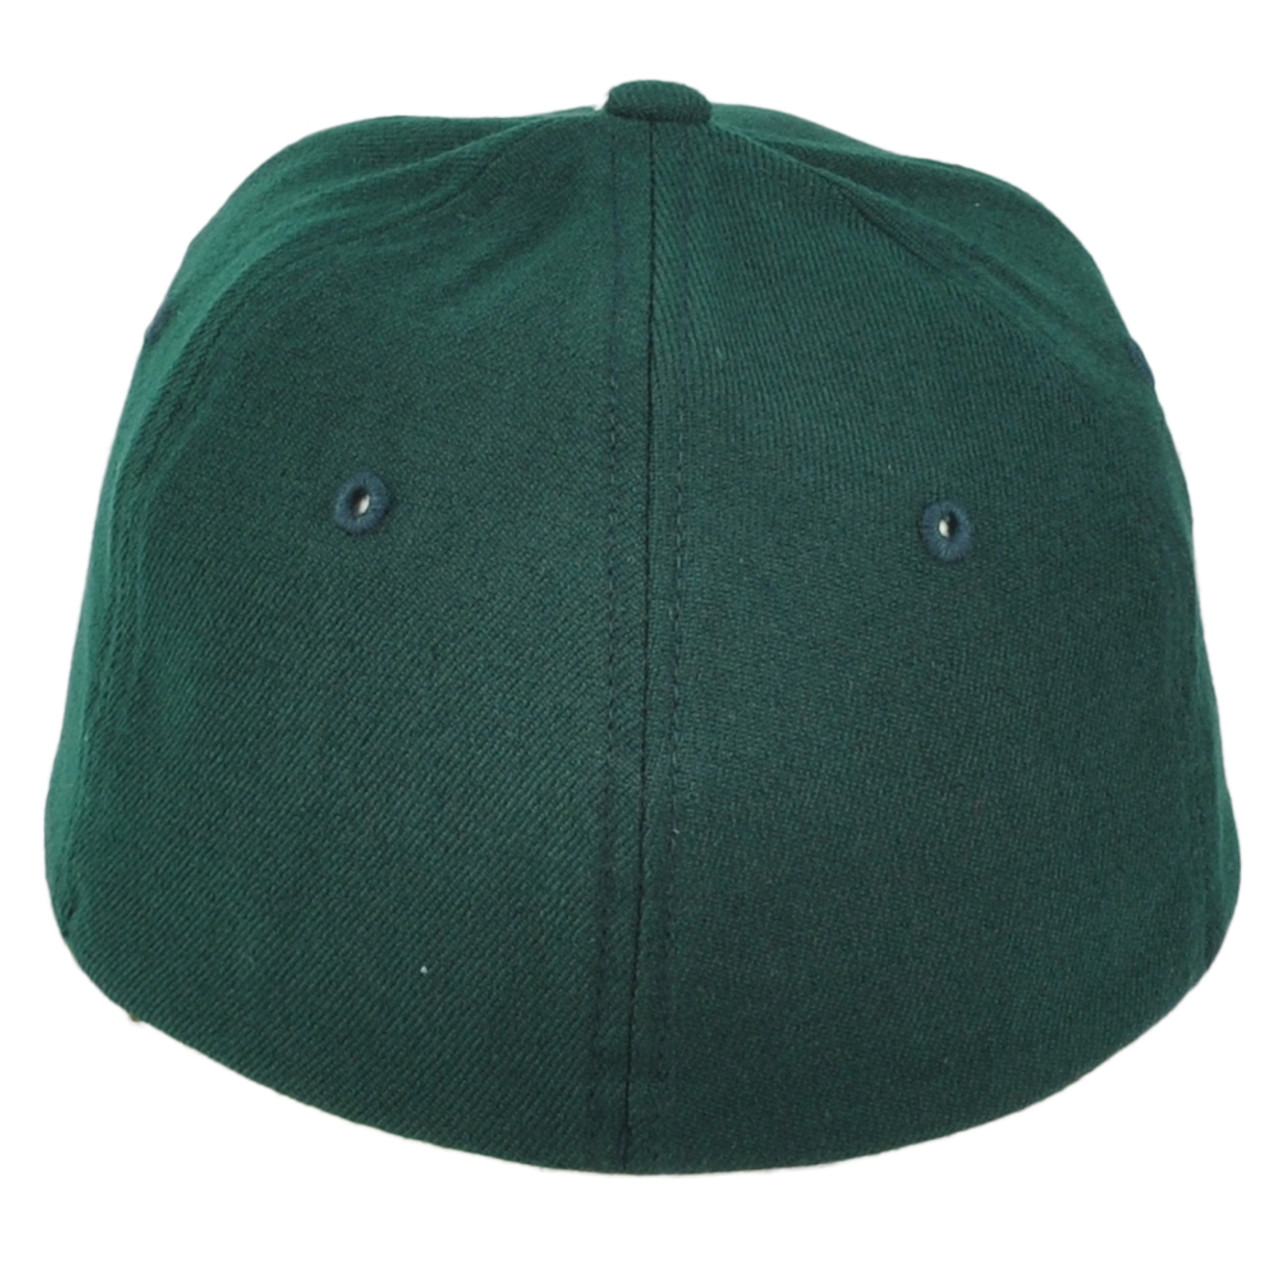 Zephyr Dark Cap Fit - Green Flex Stretch Blank Hat Store Bill Flat Forest Cap Medium/Large